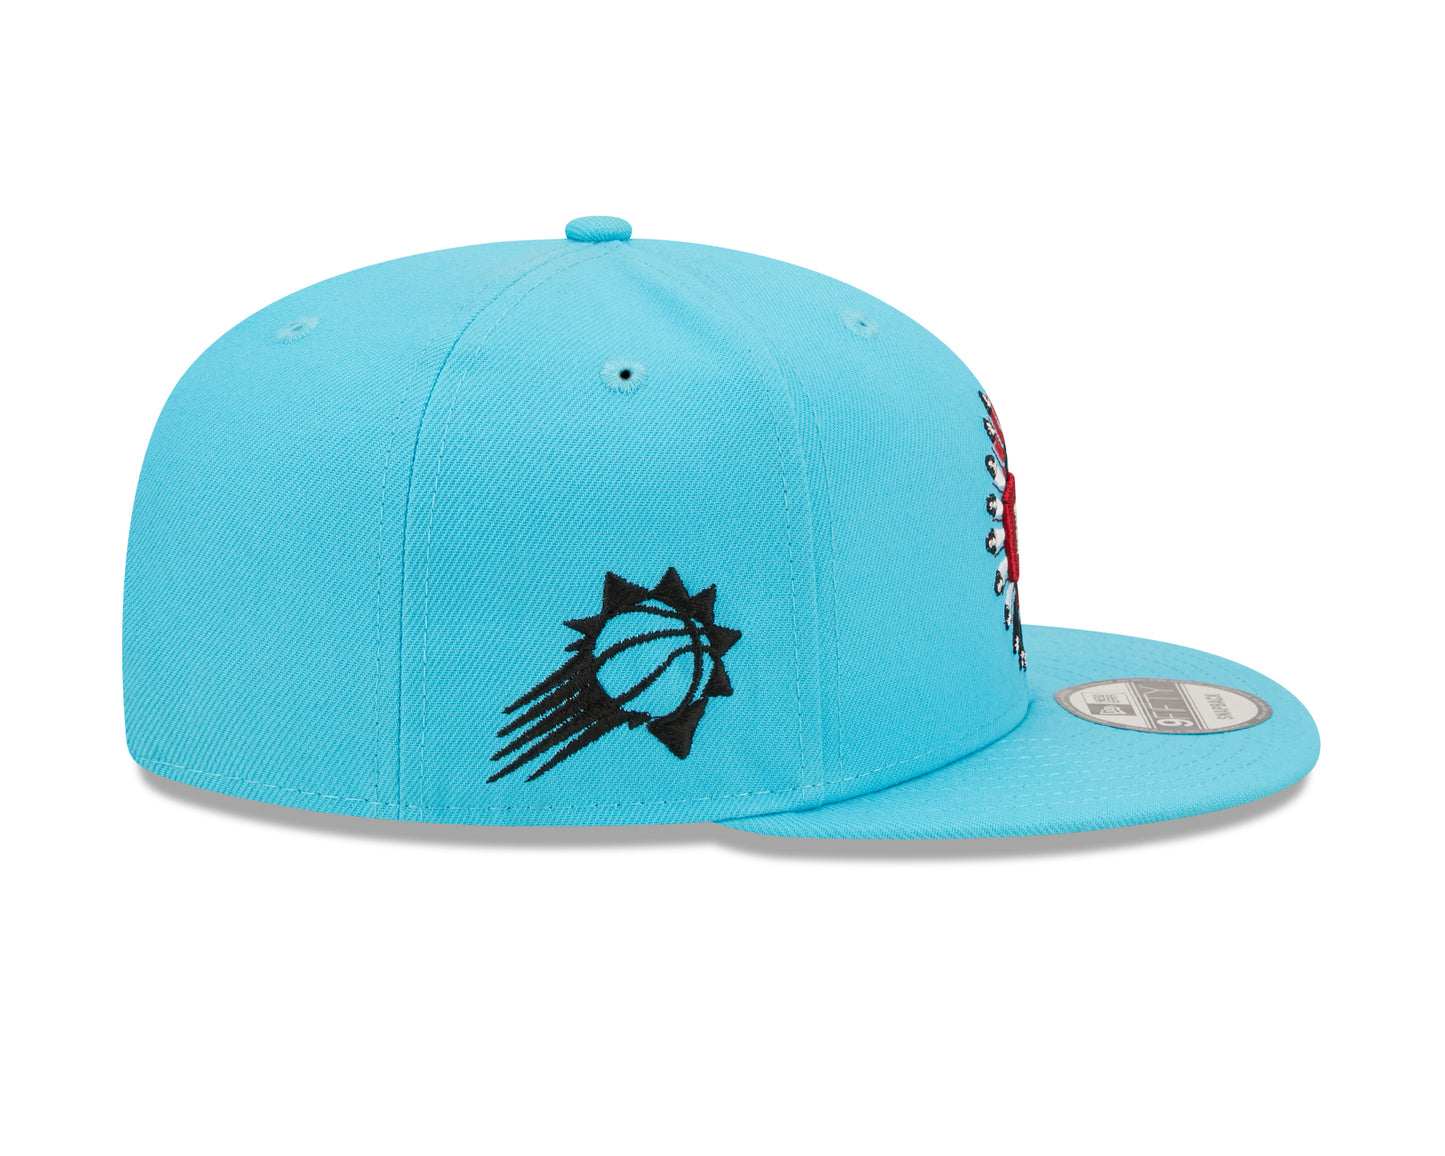 Mens Phoenix Suns New Era 2022 NBA City Edition Alternate 9FIFTY Snapback Hat